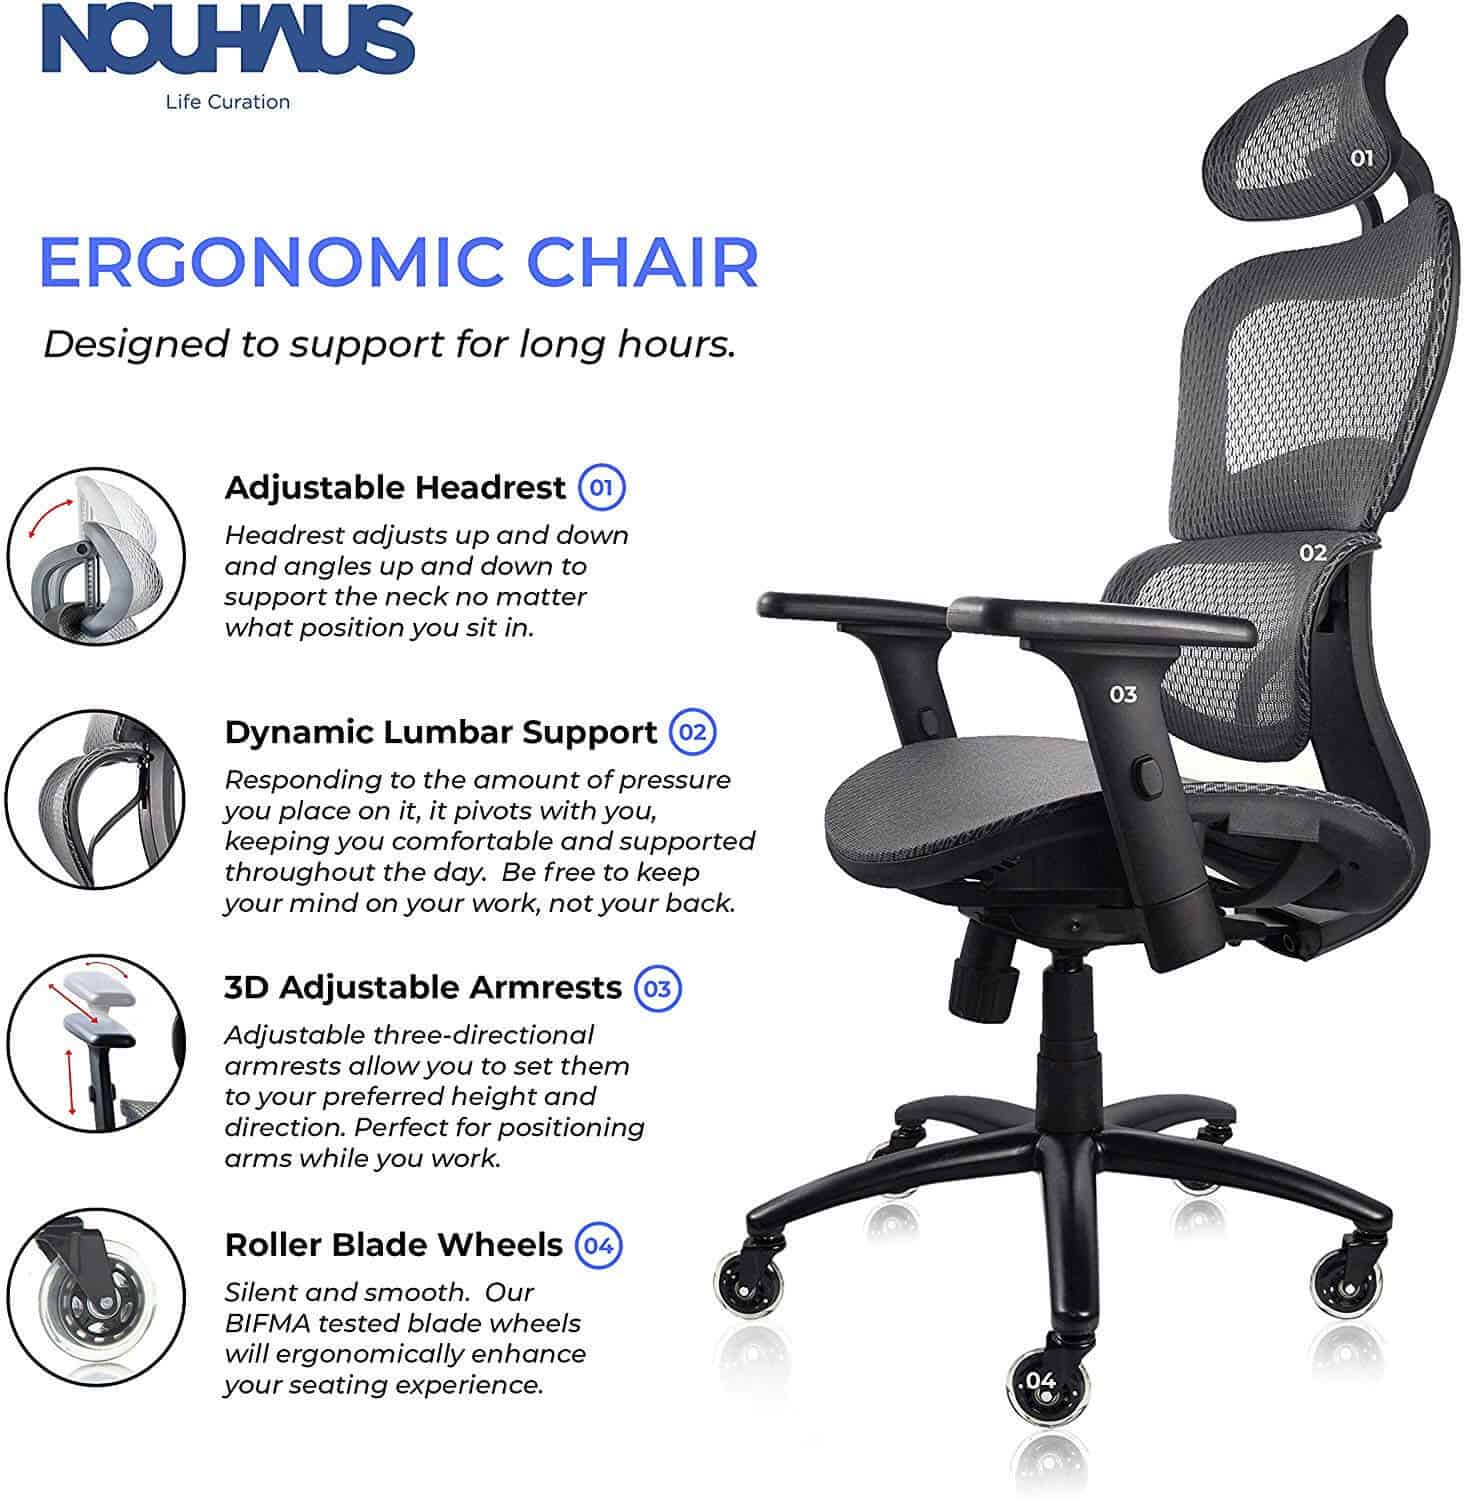 NOUHAUS Ergonomic Office Chair has ergonomic features.